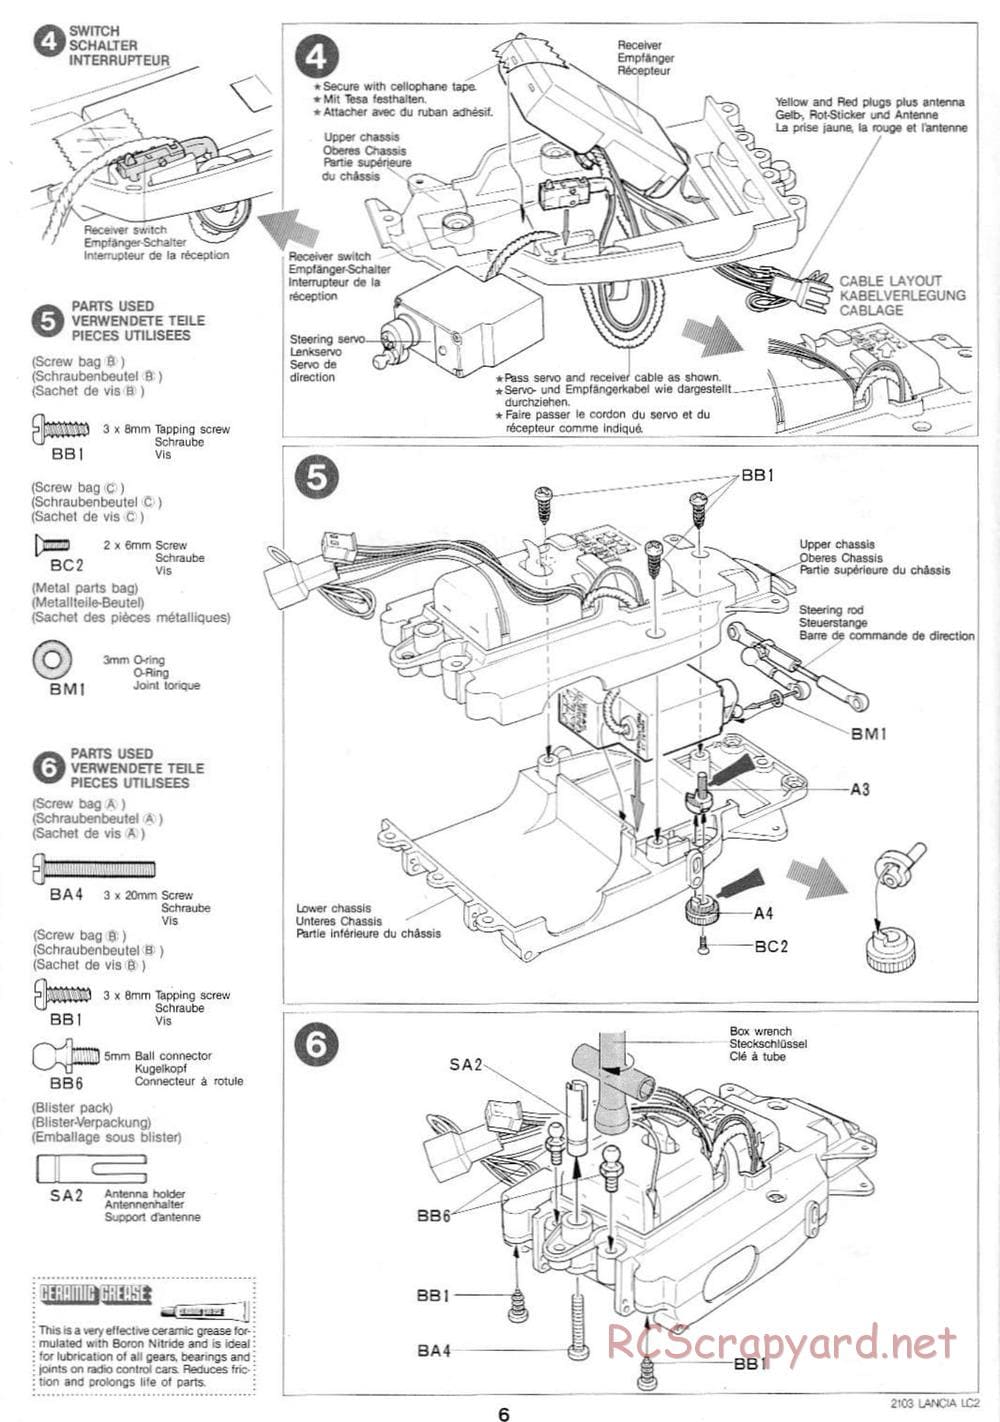 Tamiya - Tamtech - Lancia LC2 Chassis - Manual - Page 6